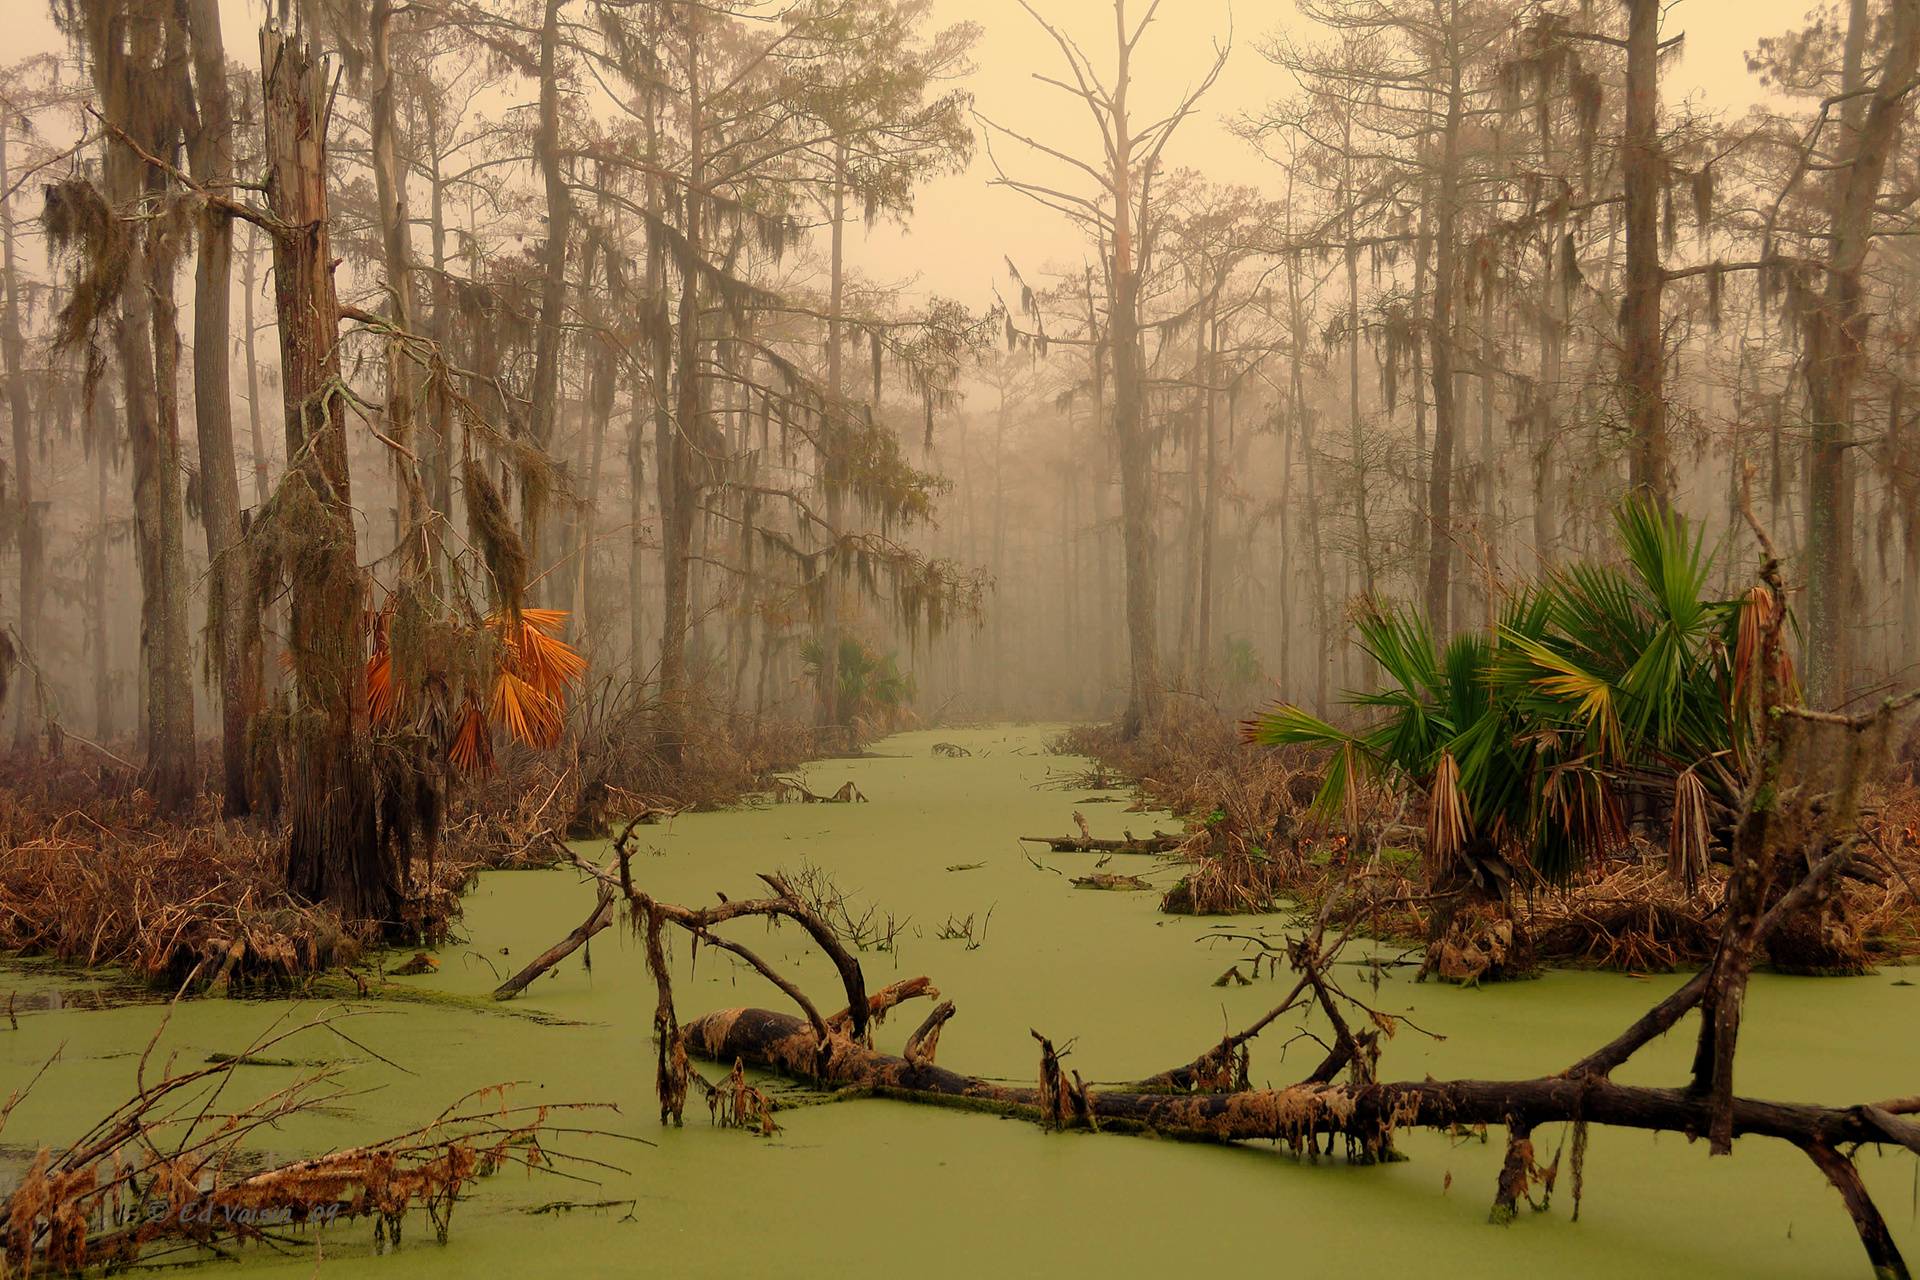 Louisiana Swamp looks like Dagobah